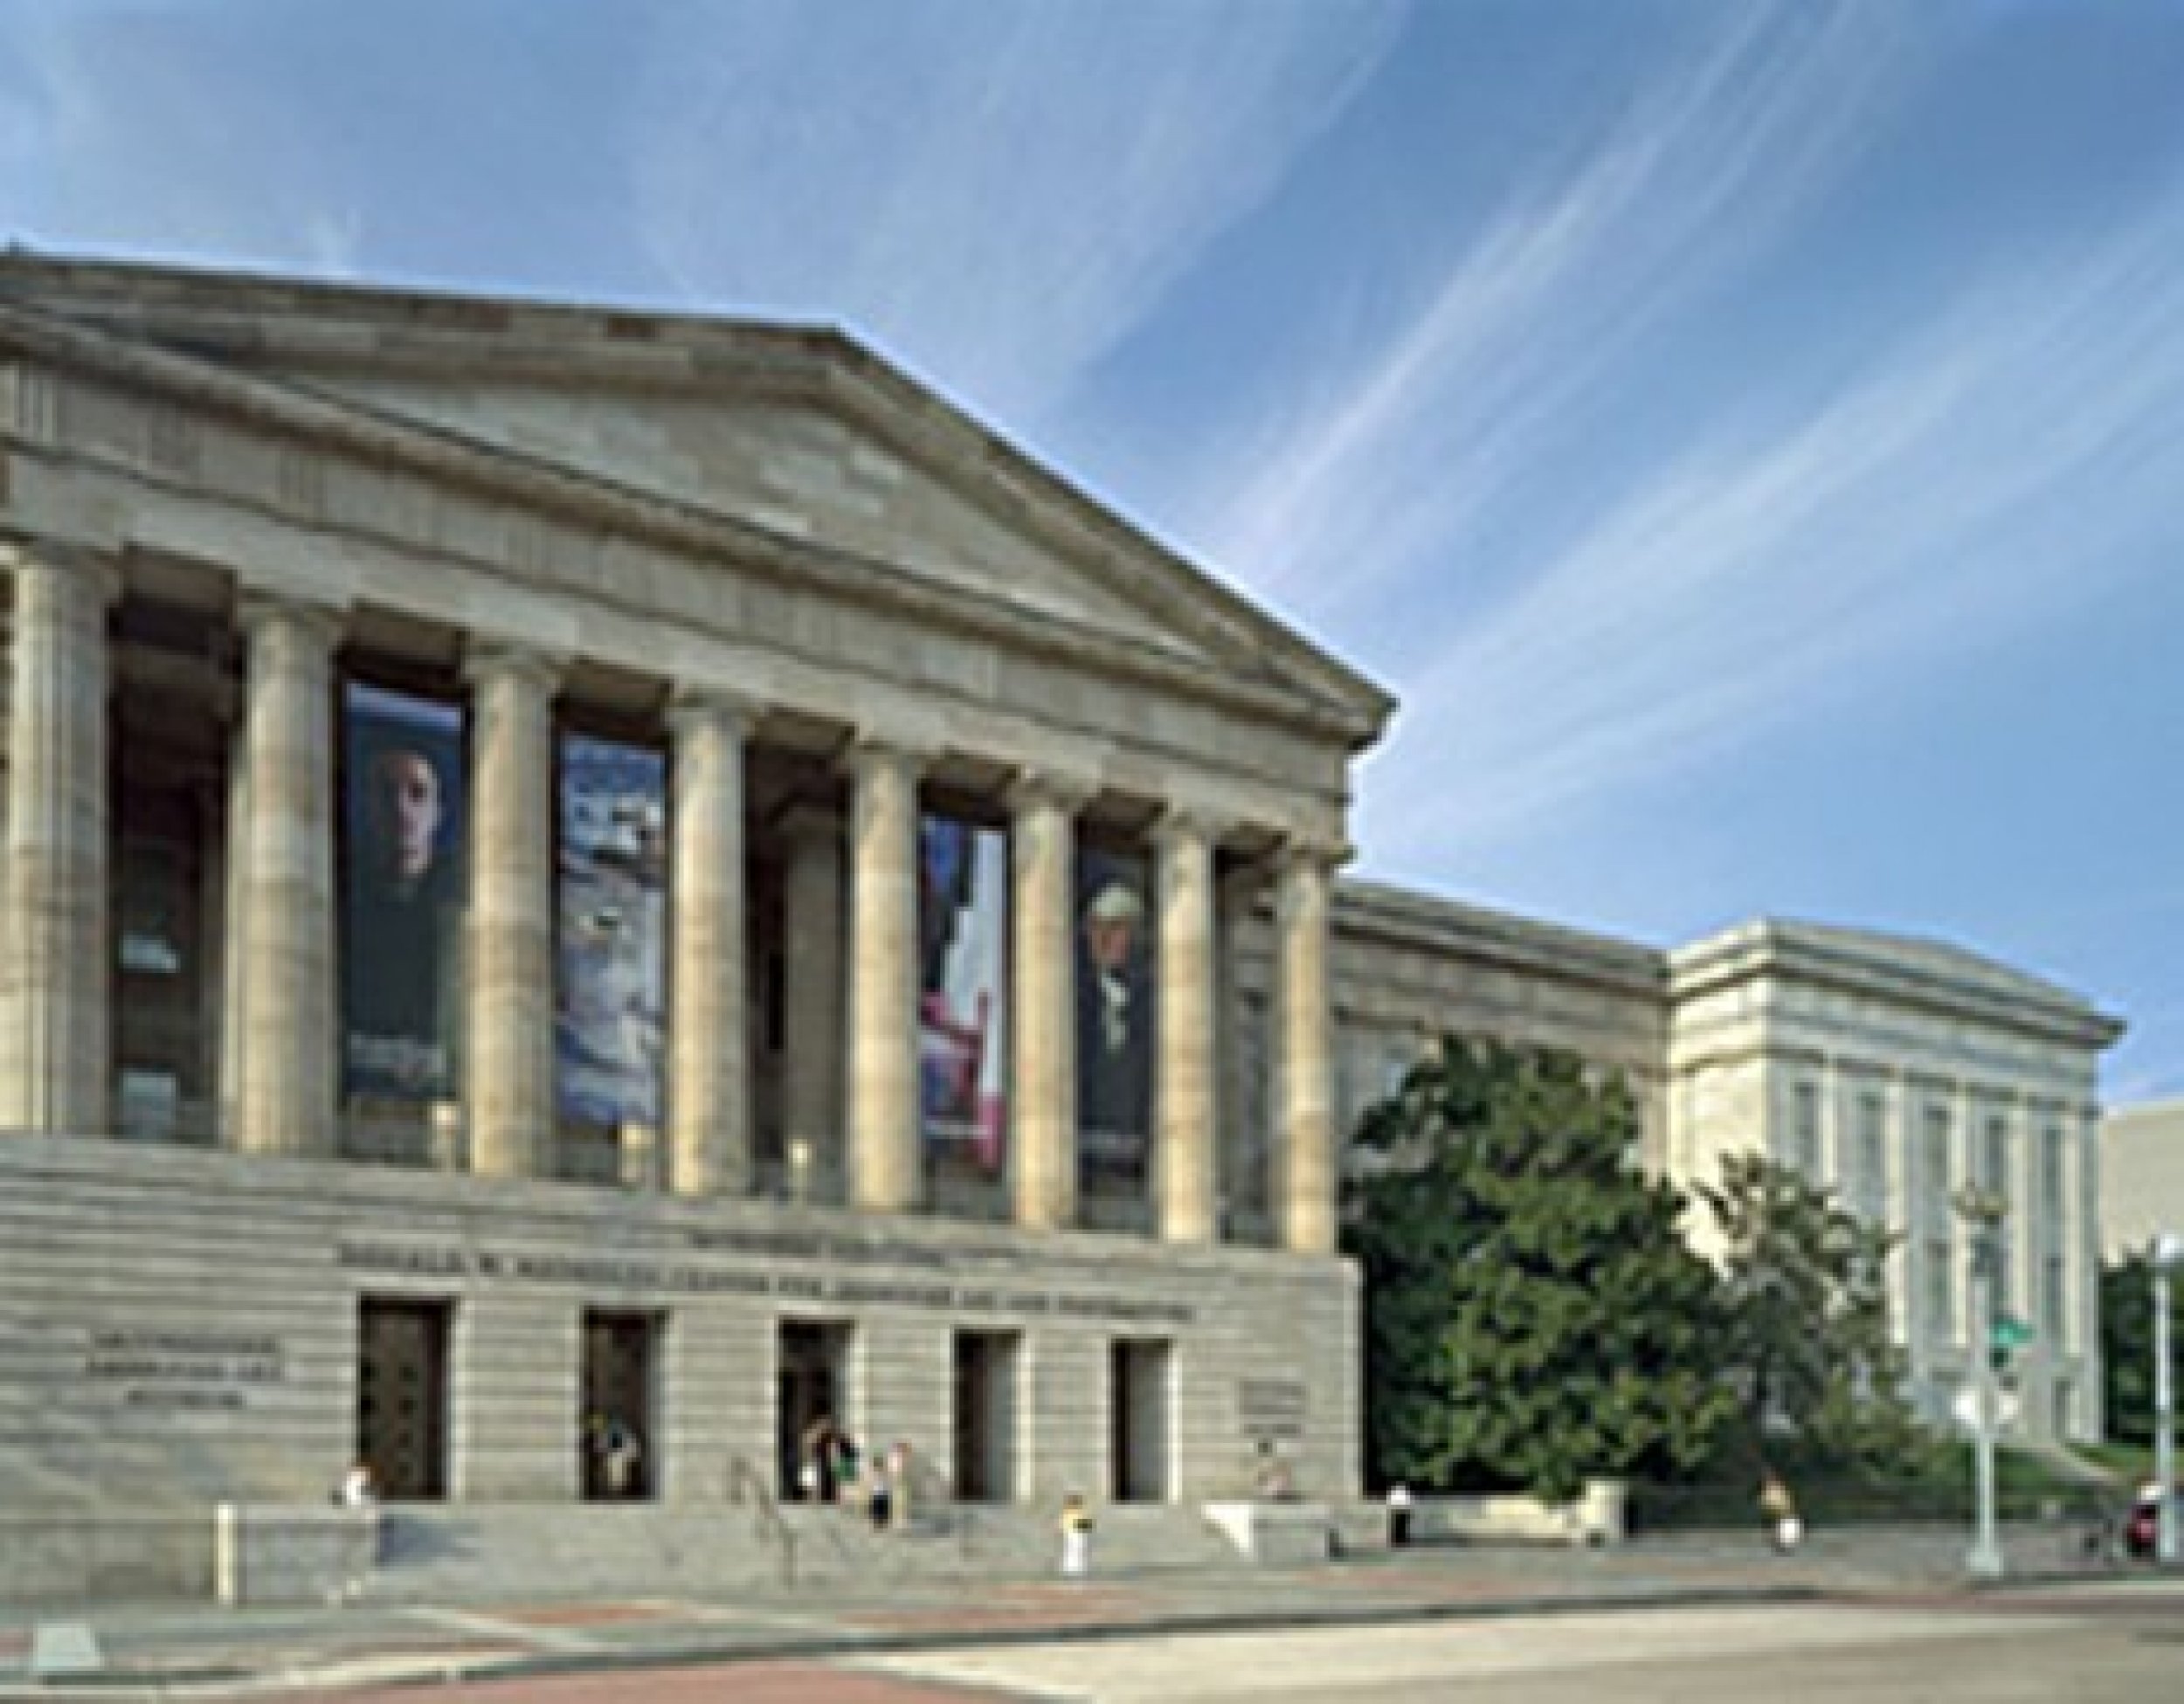 9. The Smithsonian American Art Museum